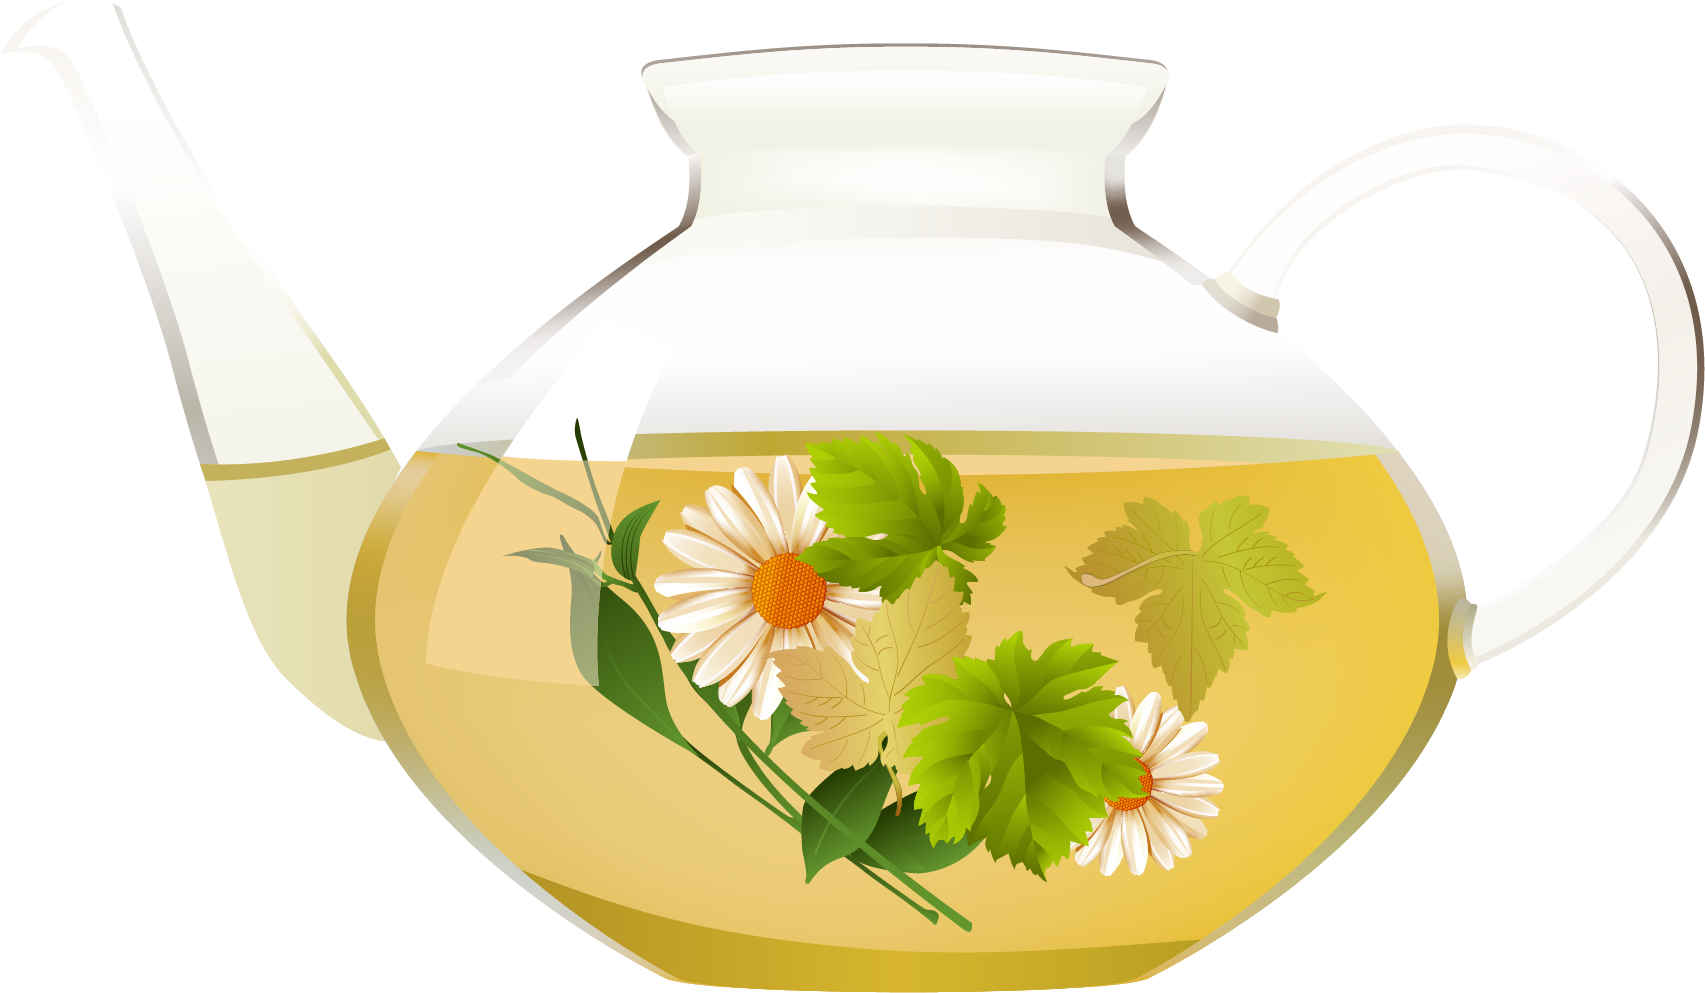 Chrysanthemum Teain Glass Teapot PNG image